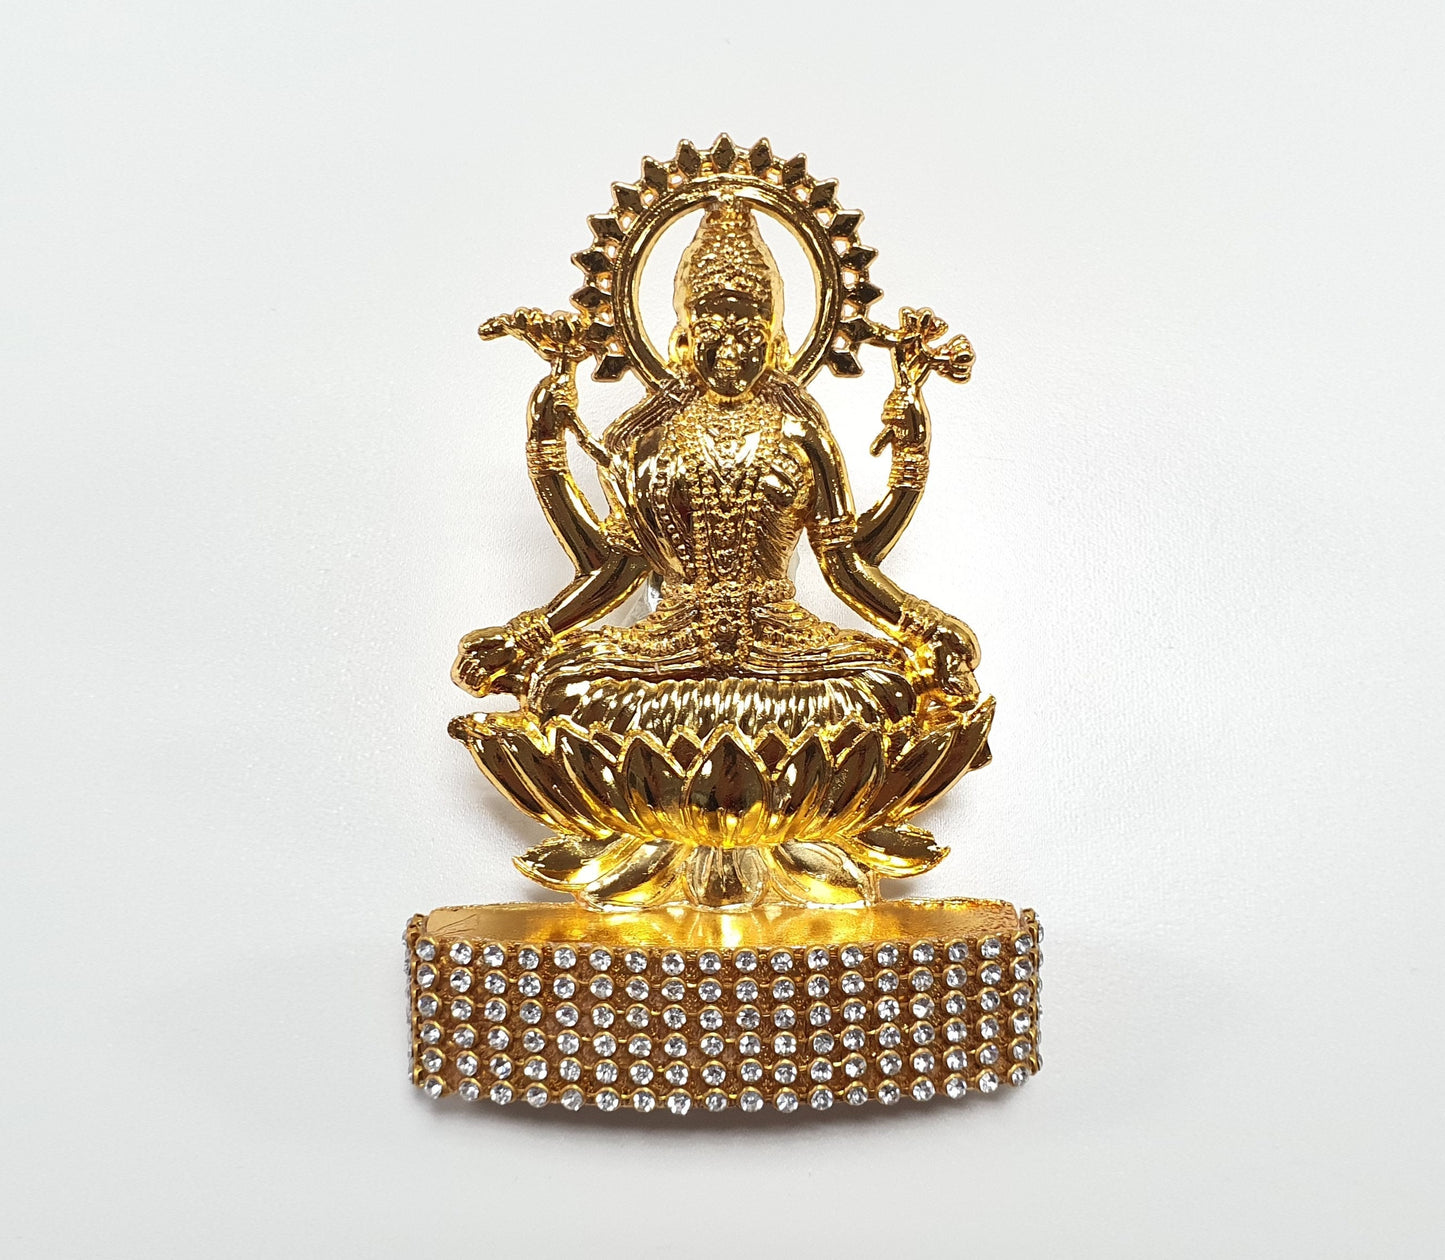 Goddess Laxmi statue